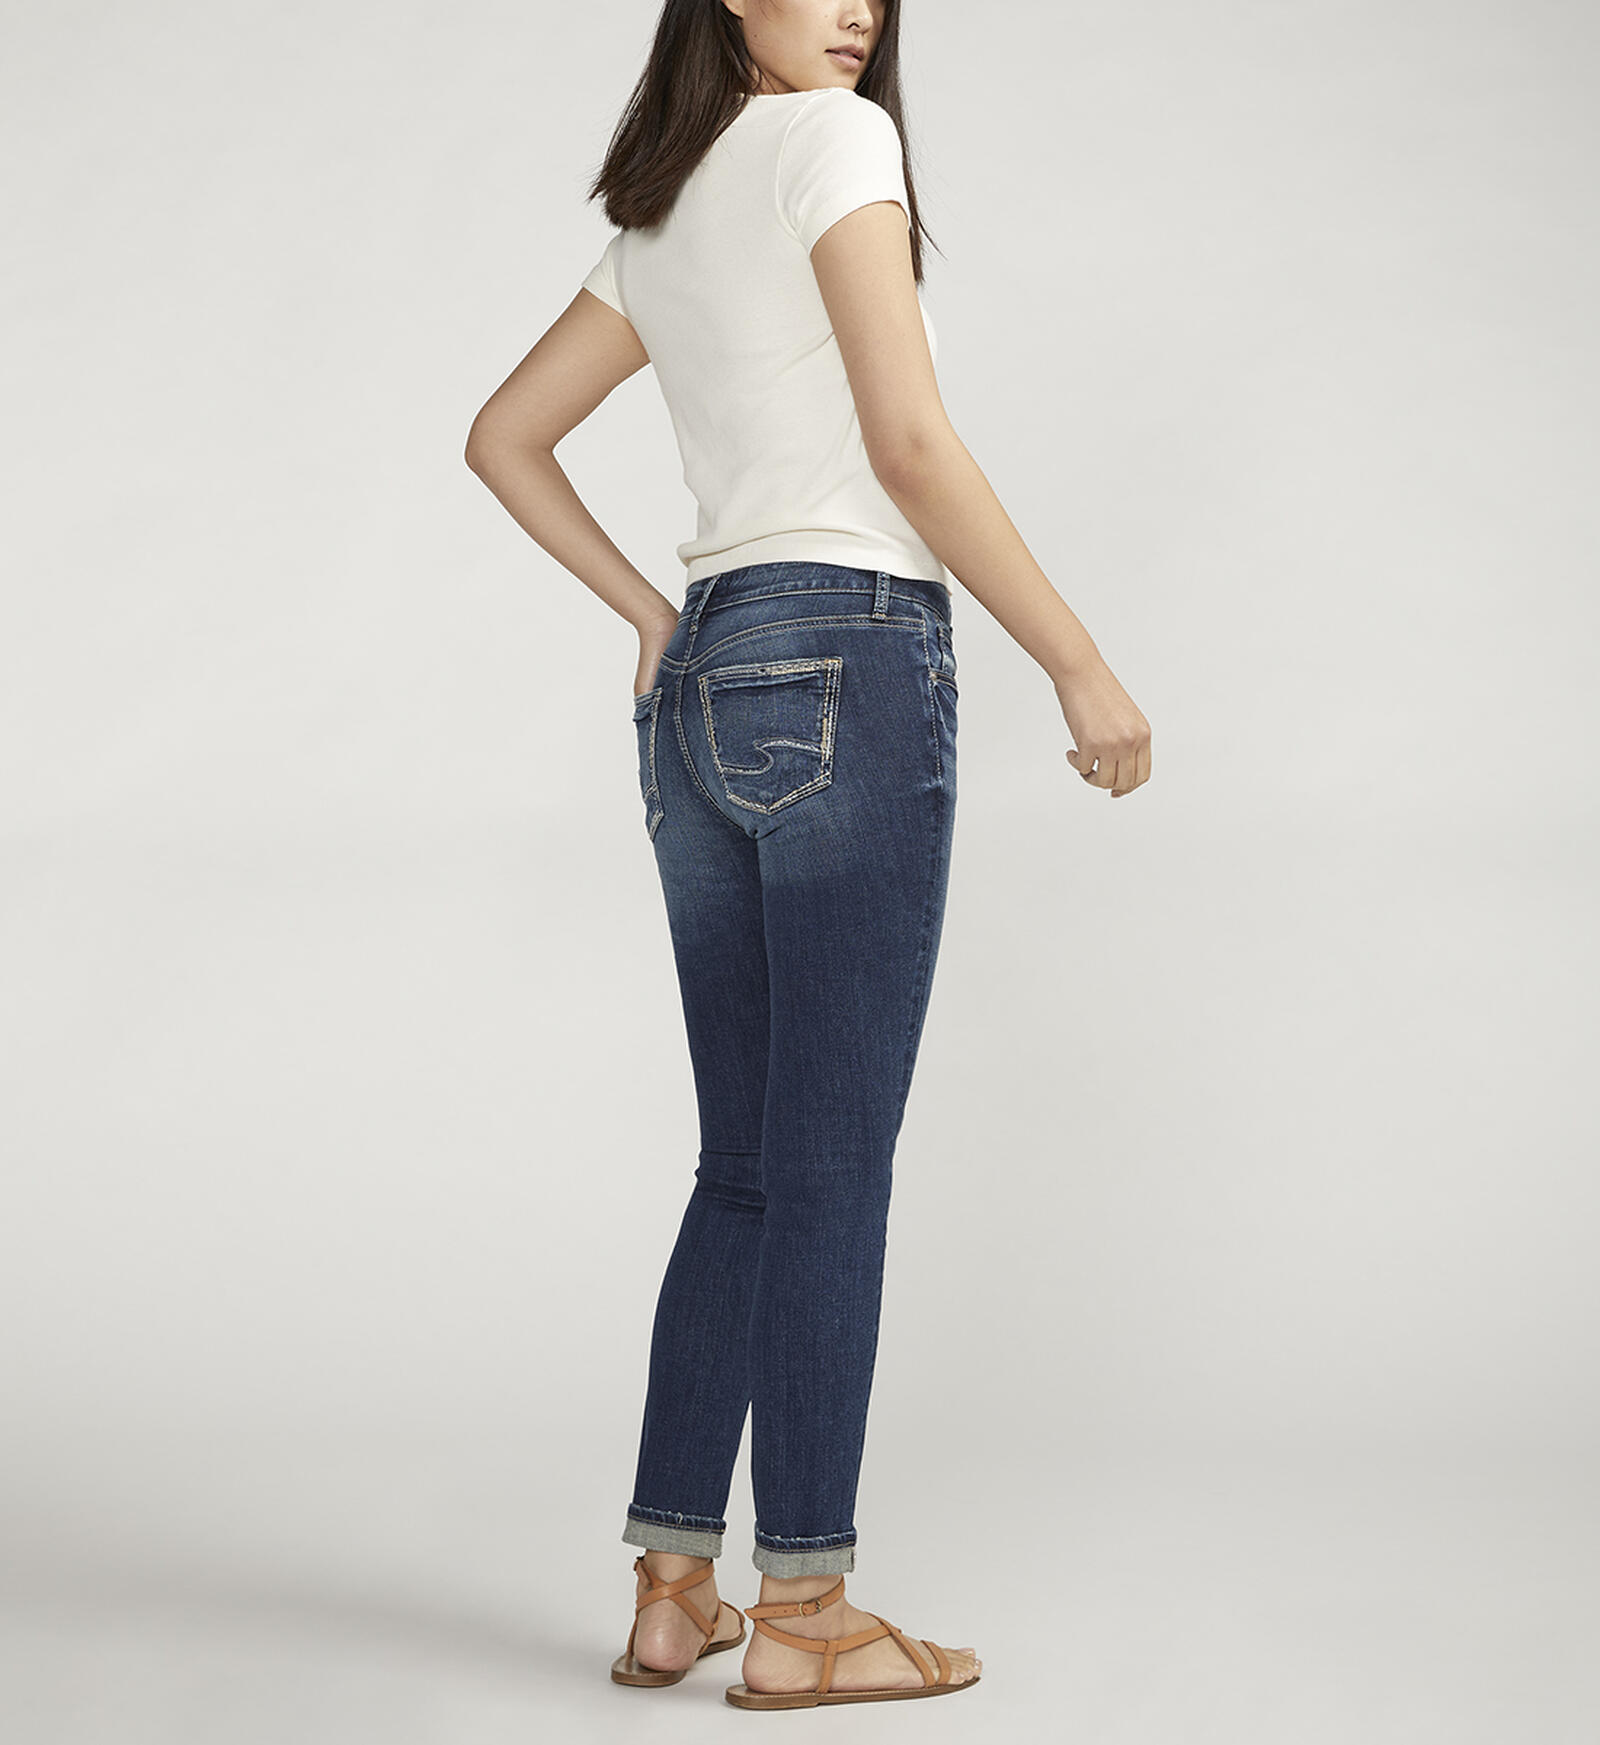 Mid Rise Distressed Girlfriend Jeans джинсы Размер: 30 купить